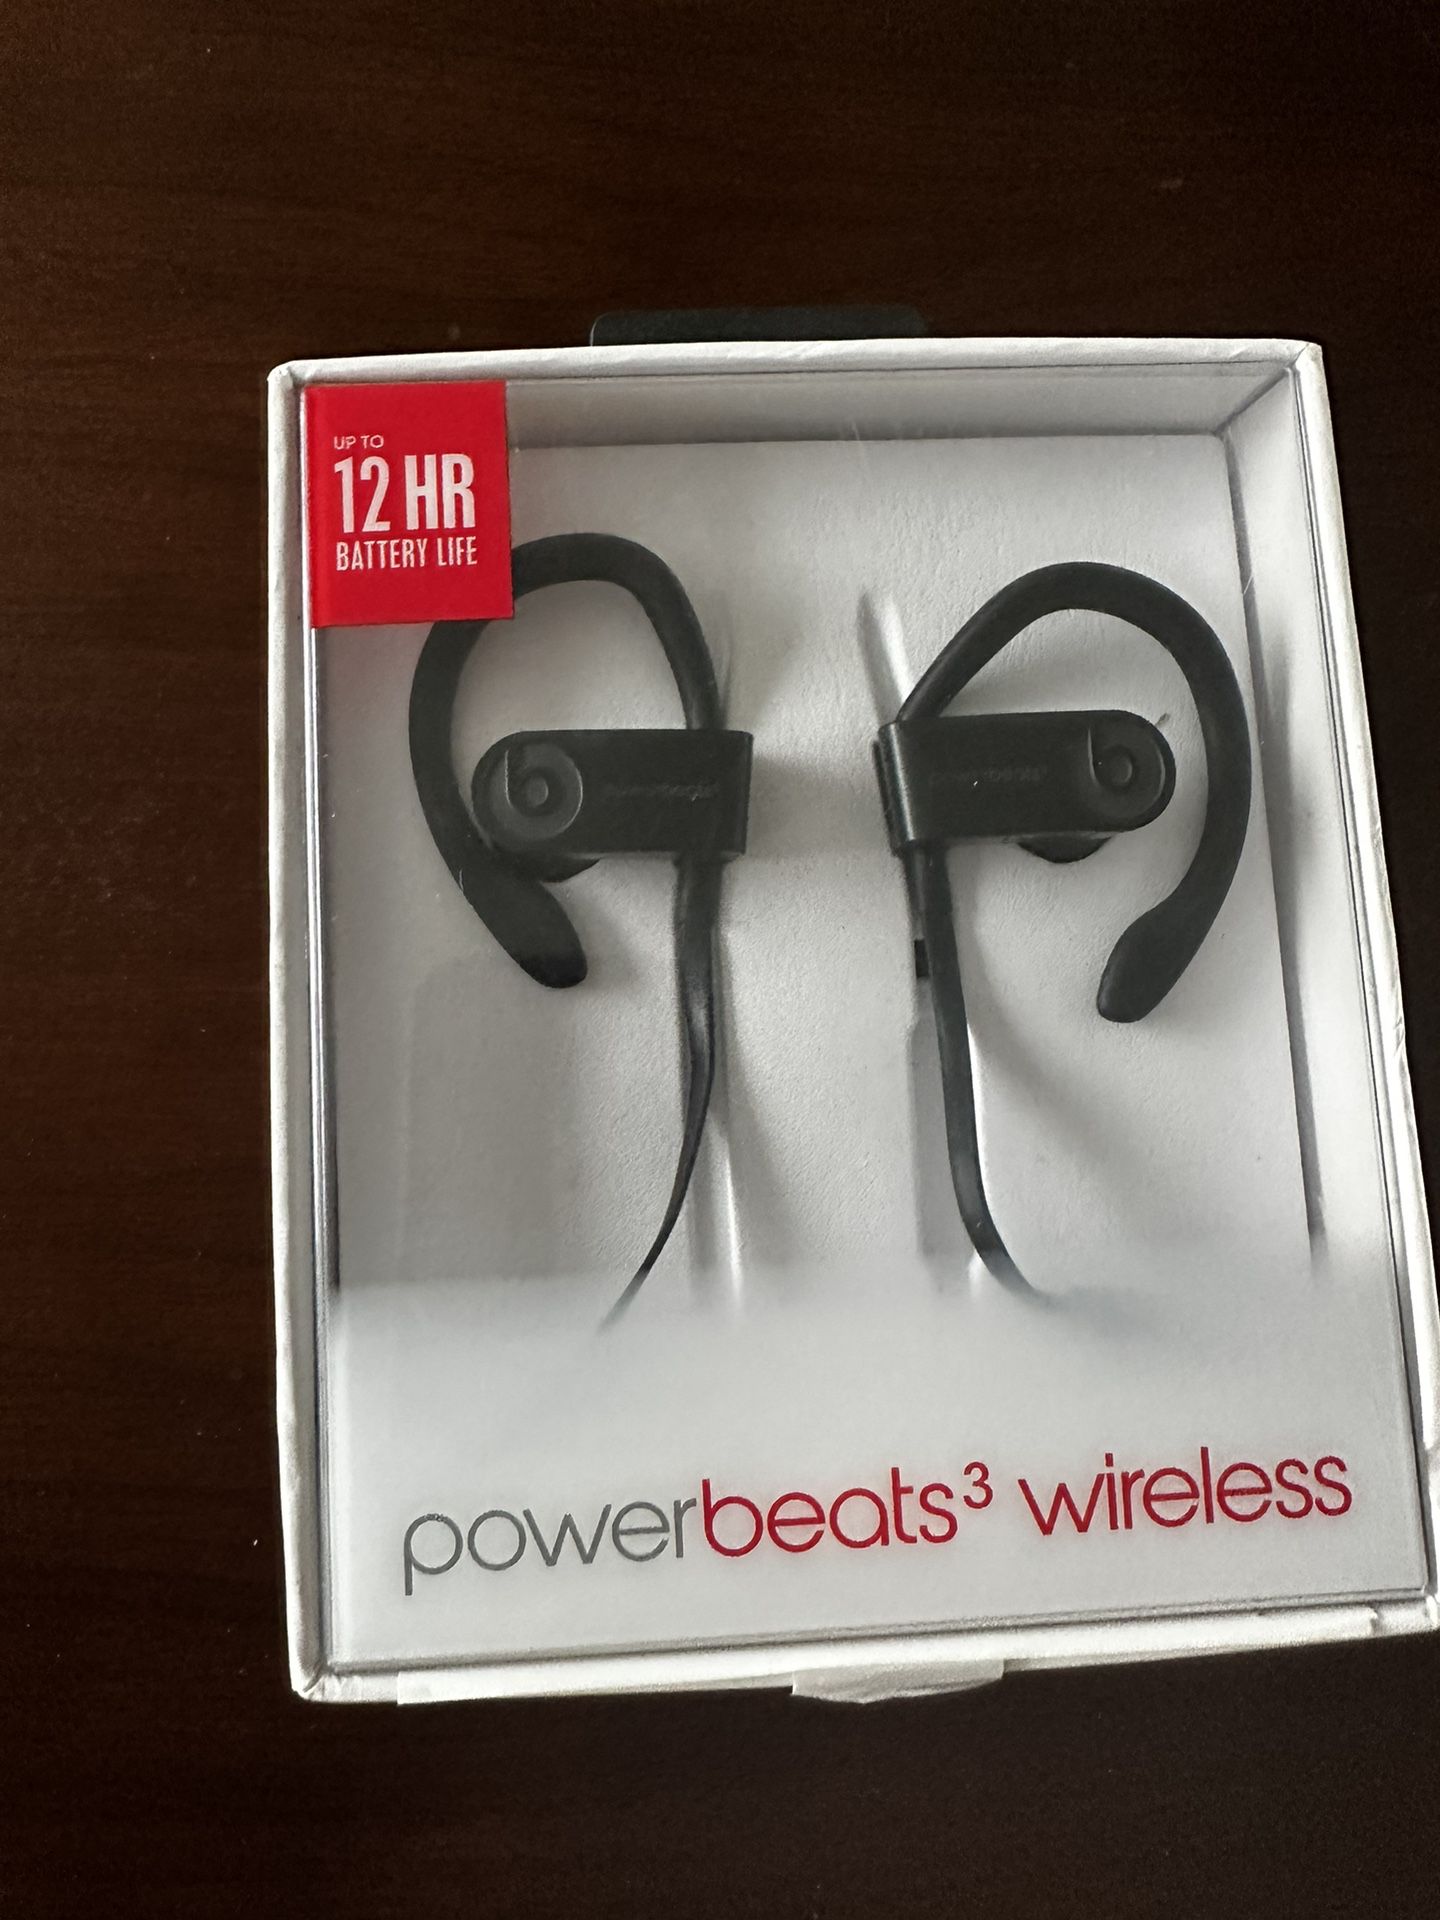 Powerbeats 3 Wireless Headphones